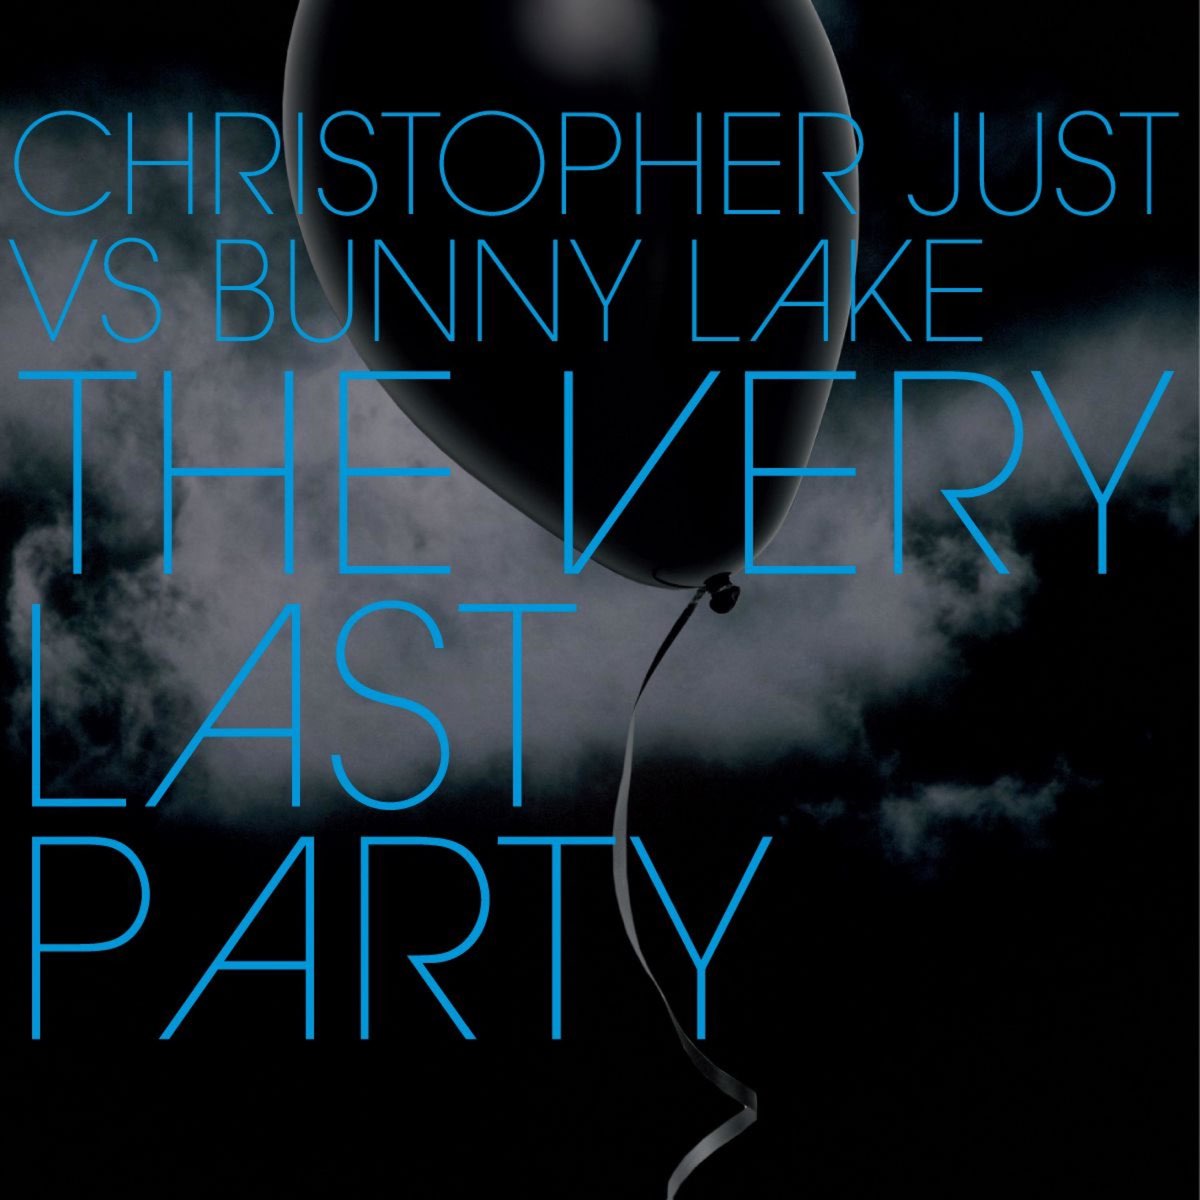 Make the Party last альбом. Bunny lake